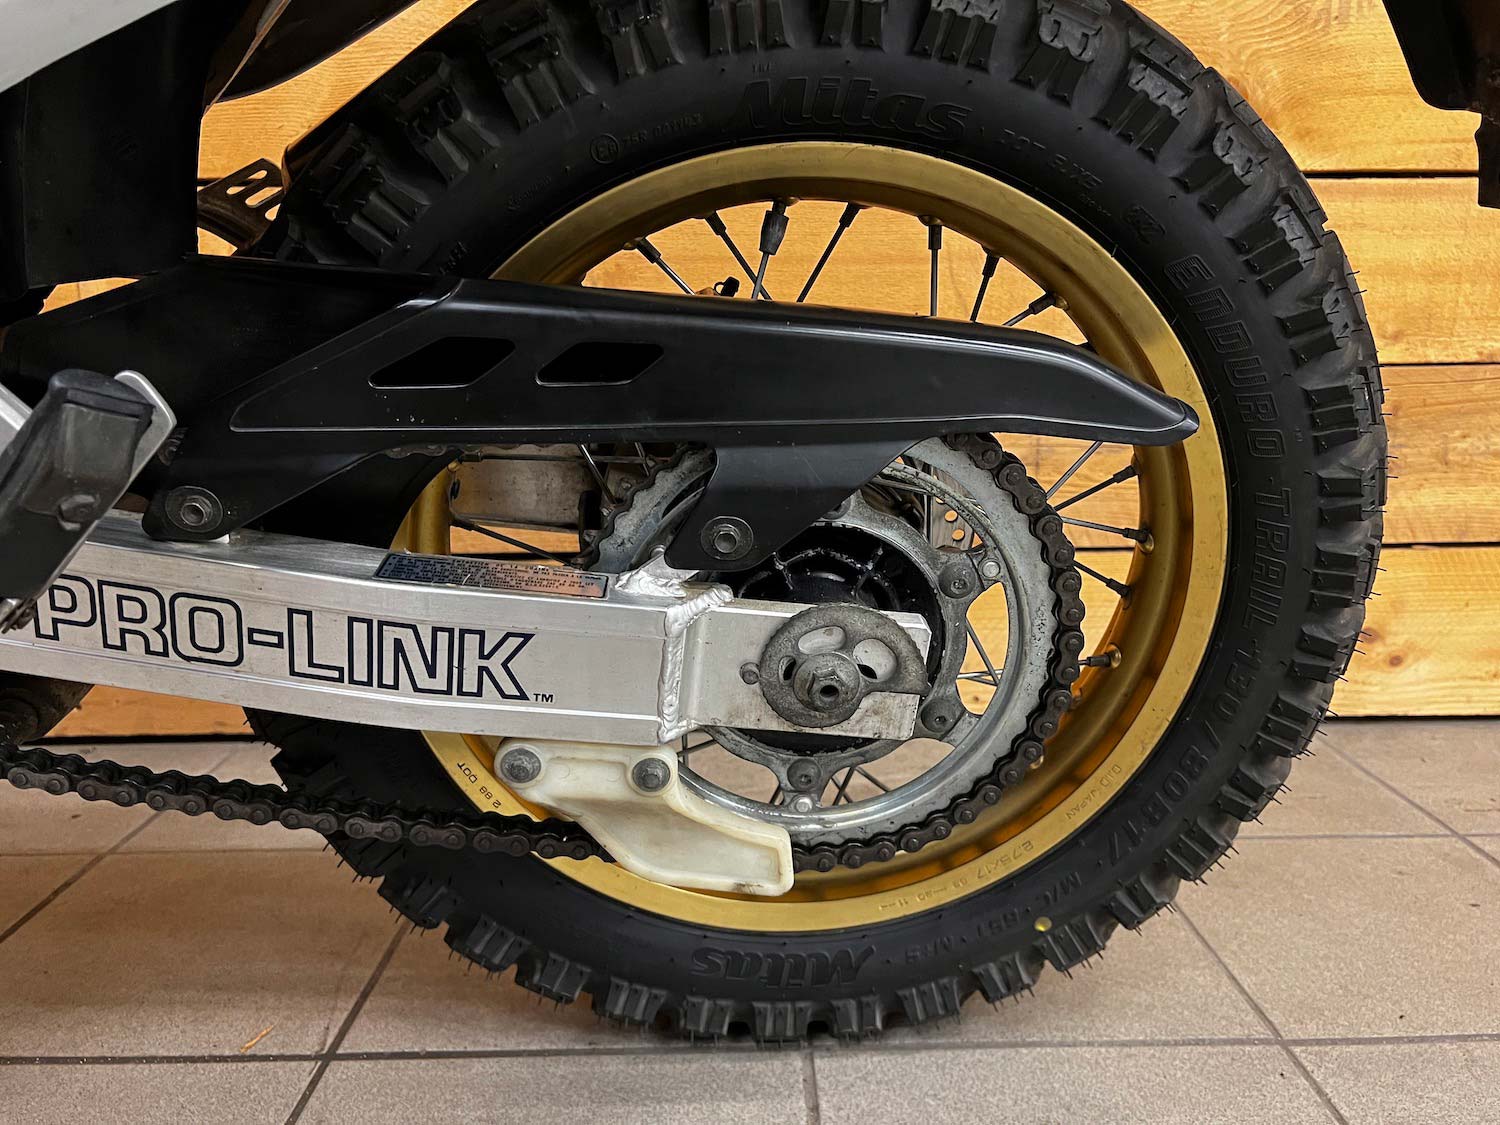 Honda_Africa_Twin_Cezanne_classic_motorcycle_1-153.jpg